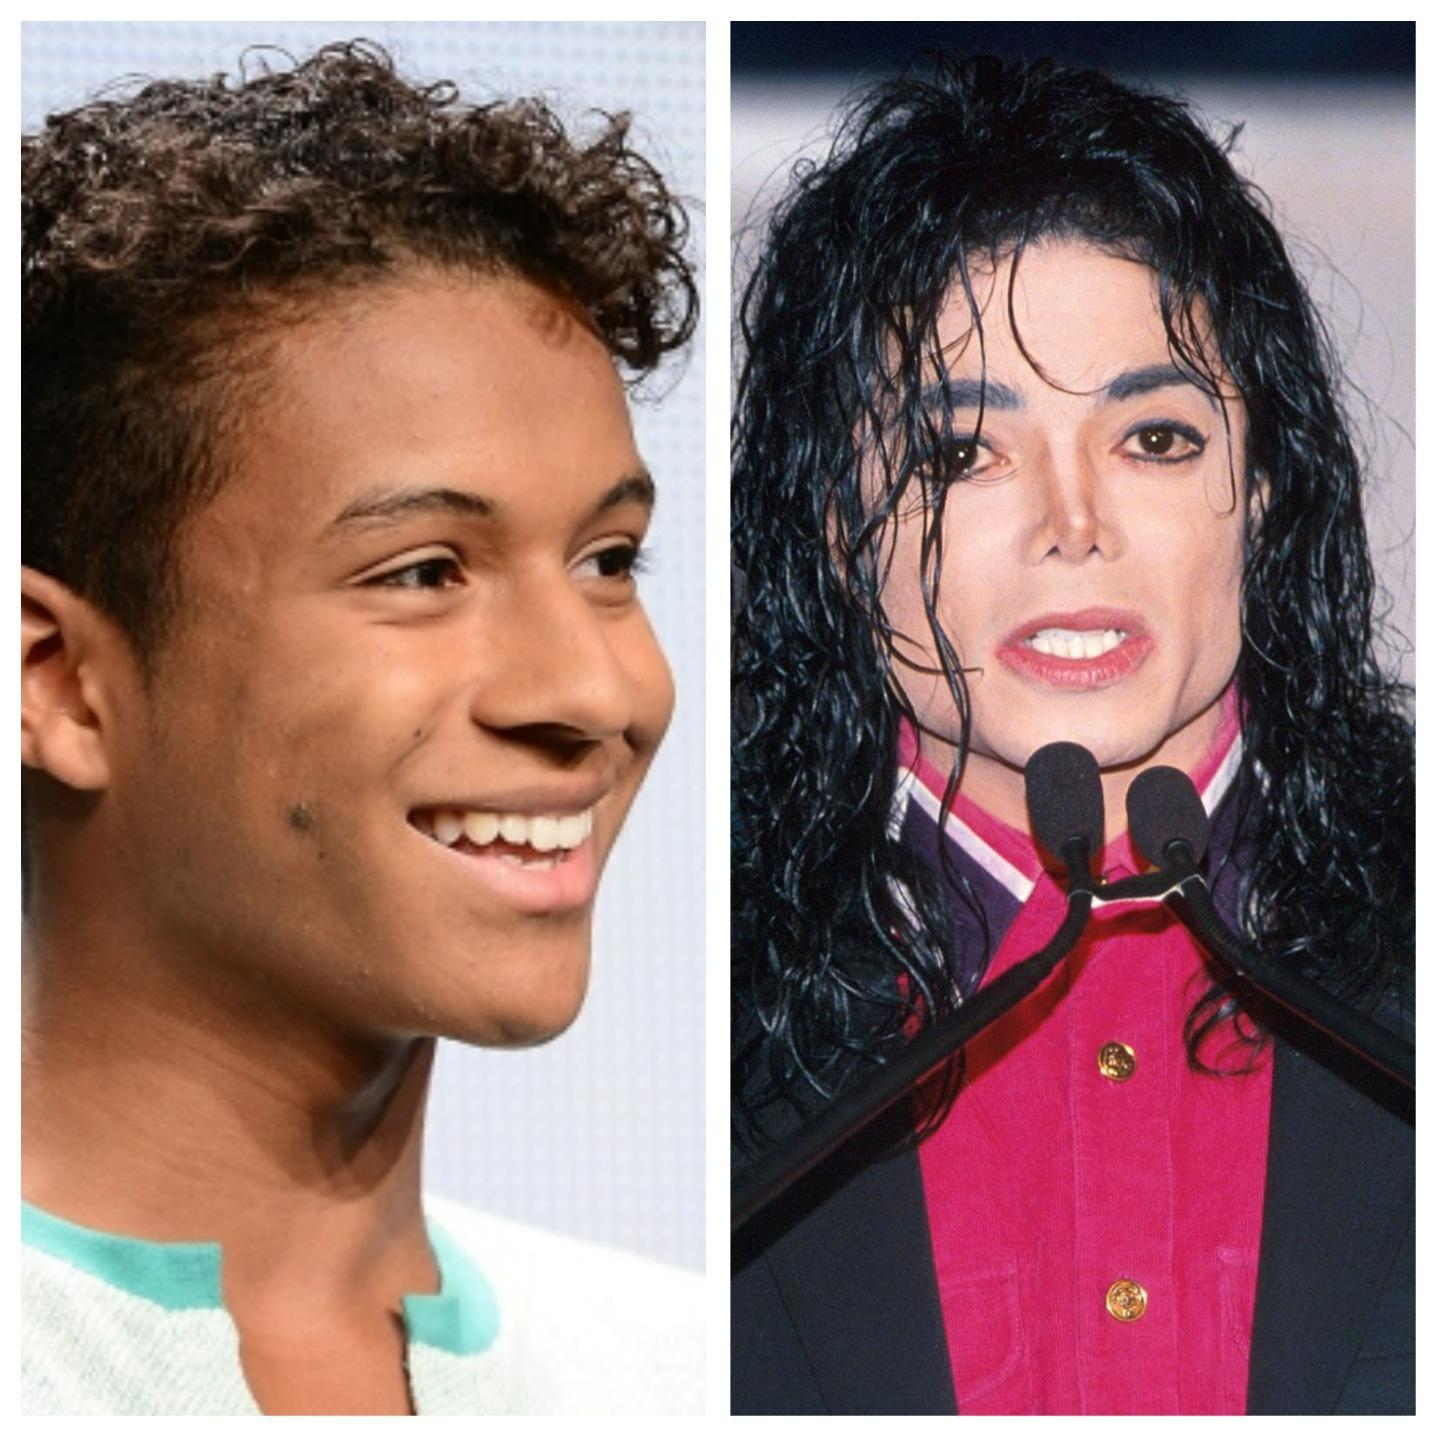 Michael Jackson's nephew to portray singer in upcoming biopic